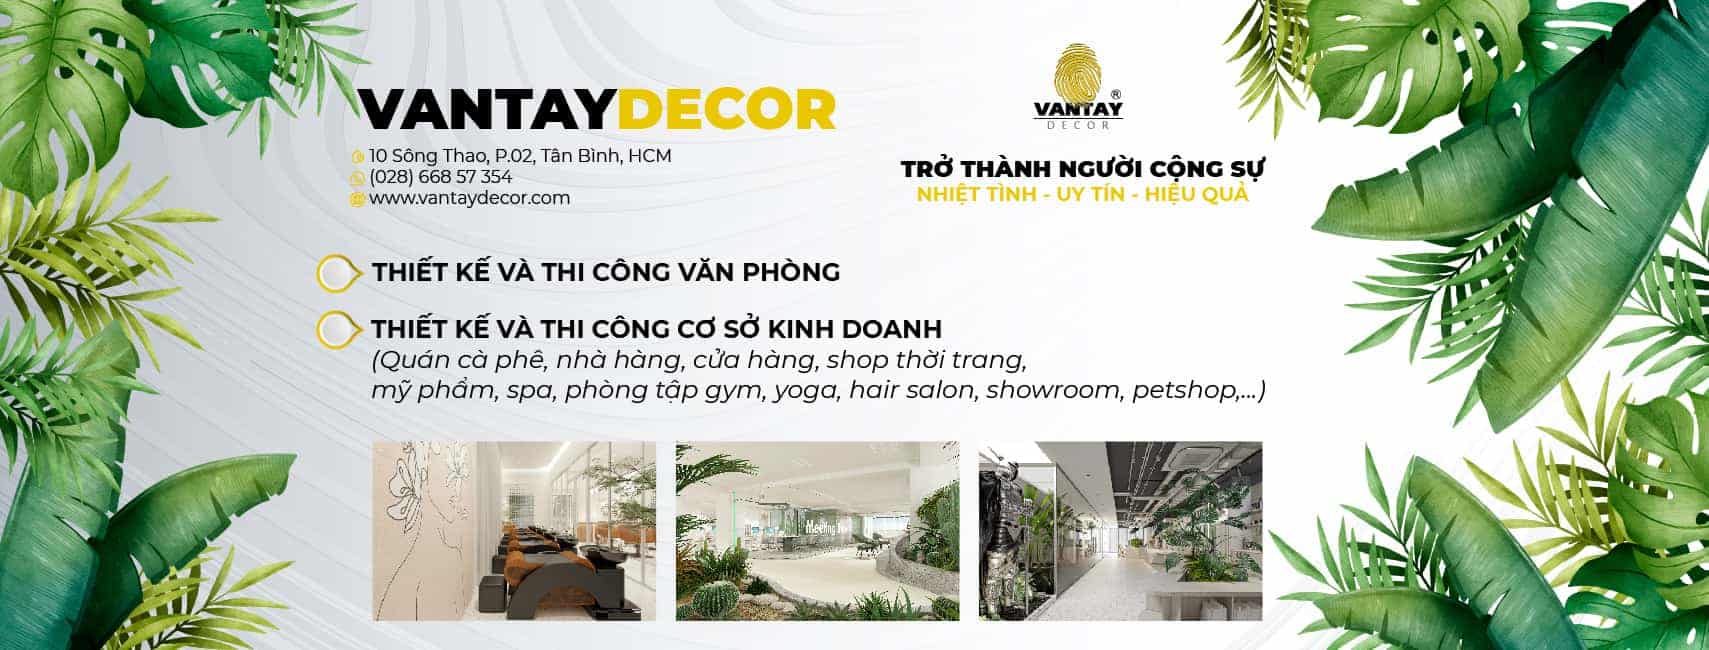 Van-Tay-decor-thiet-ke-va-thi-cong-noi-that-hcm